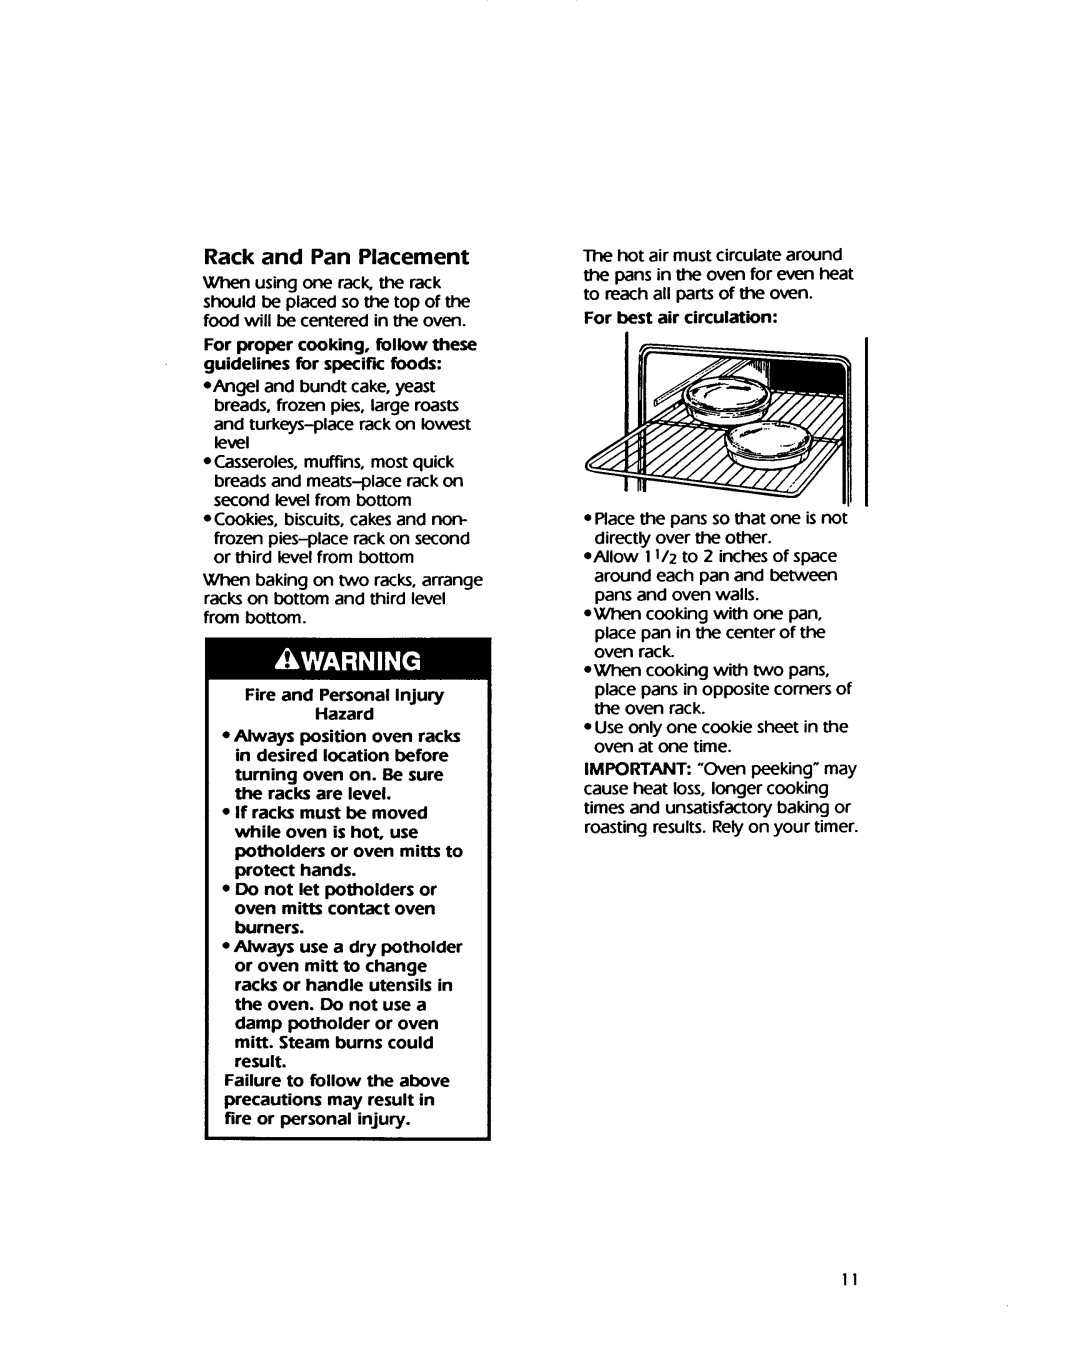 KitchenAid Double Oven, KGBS276X manual 